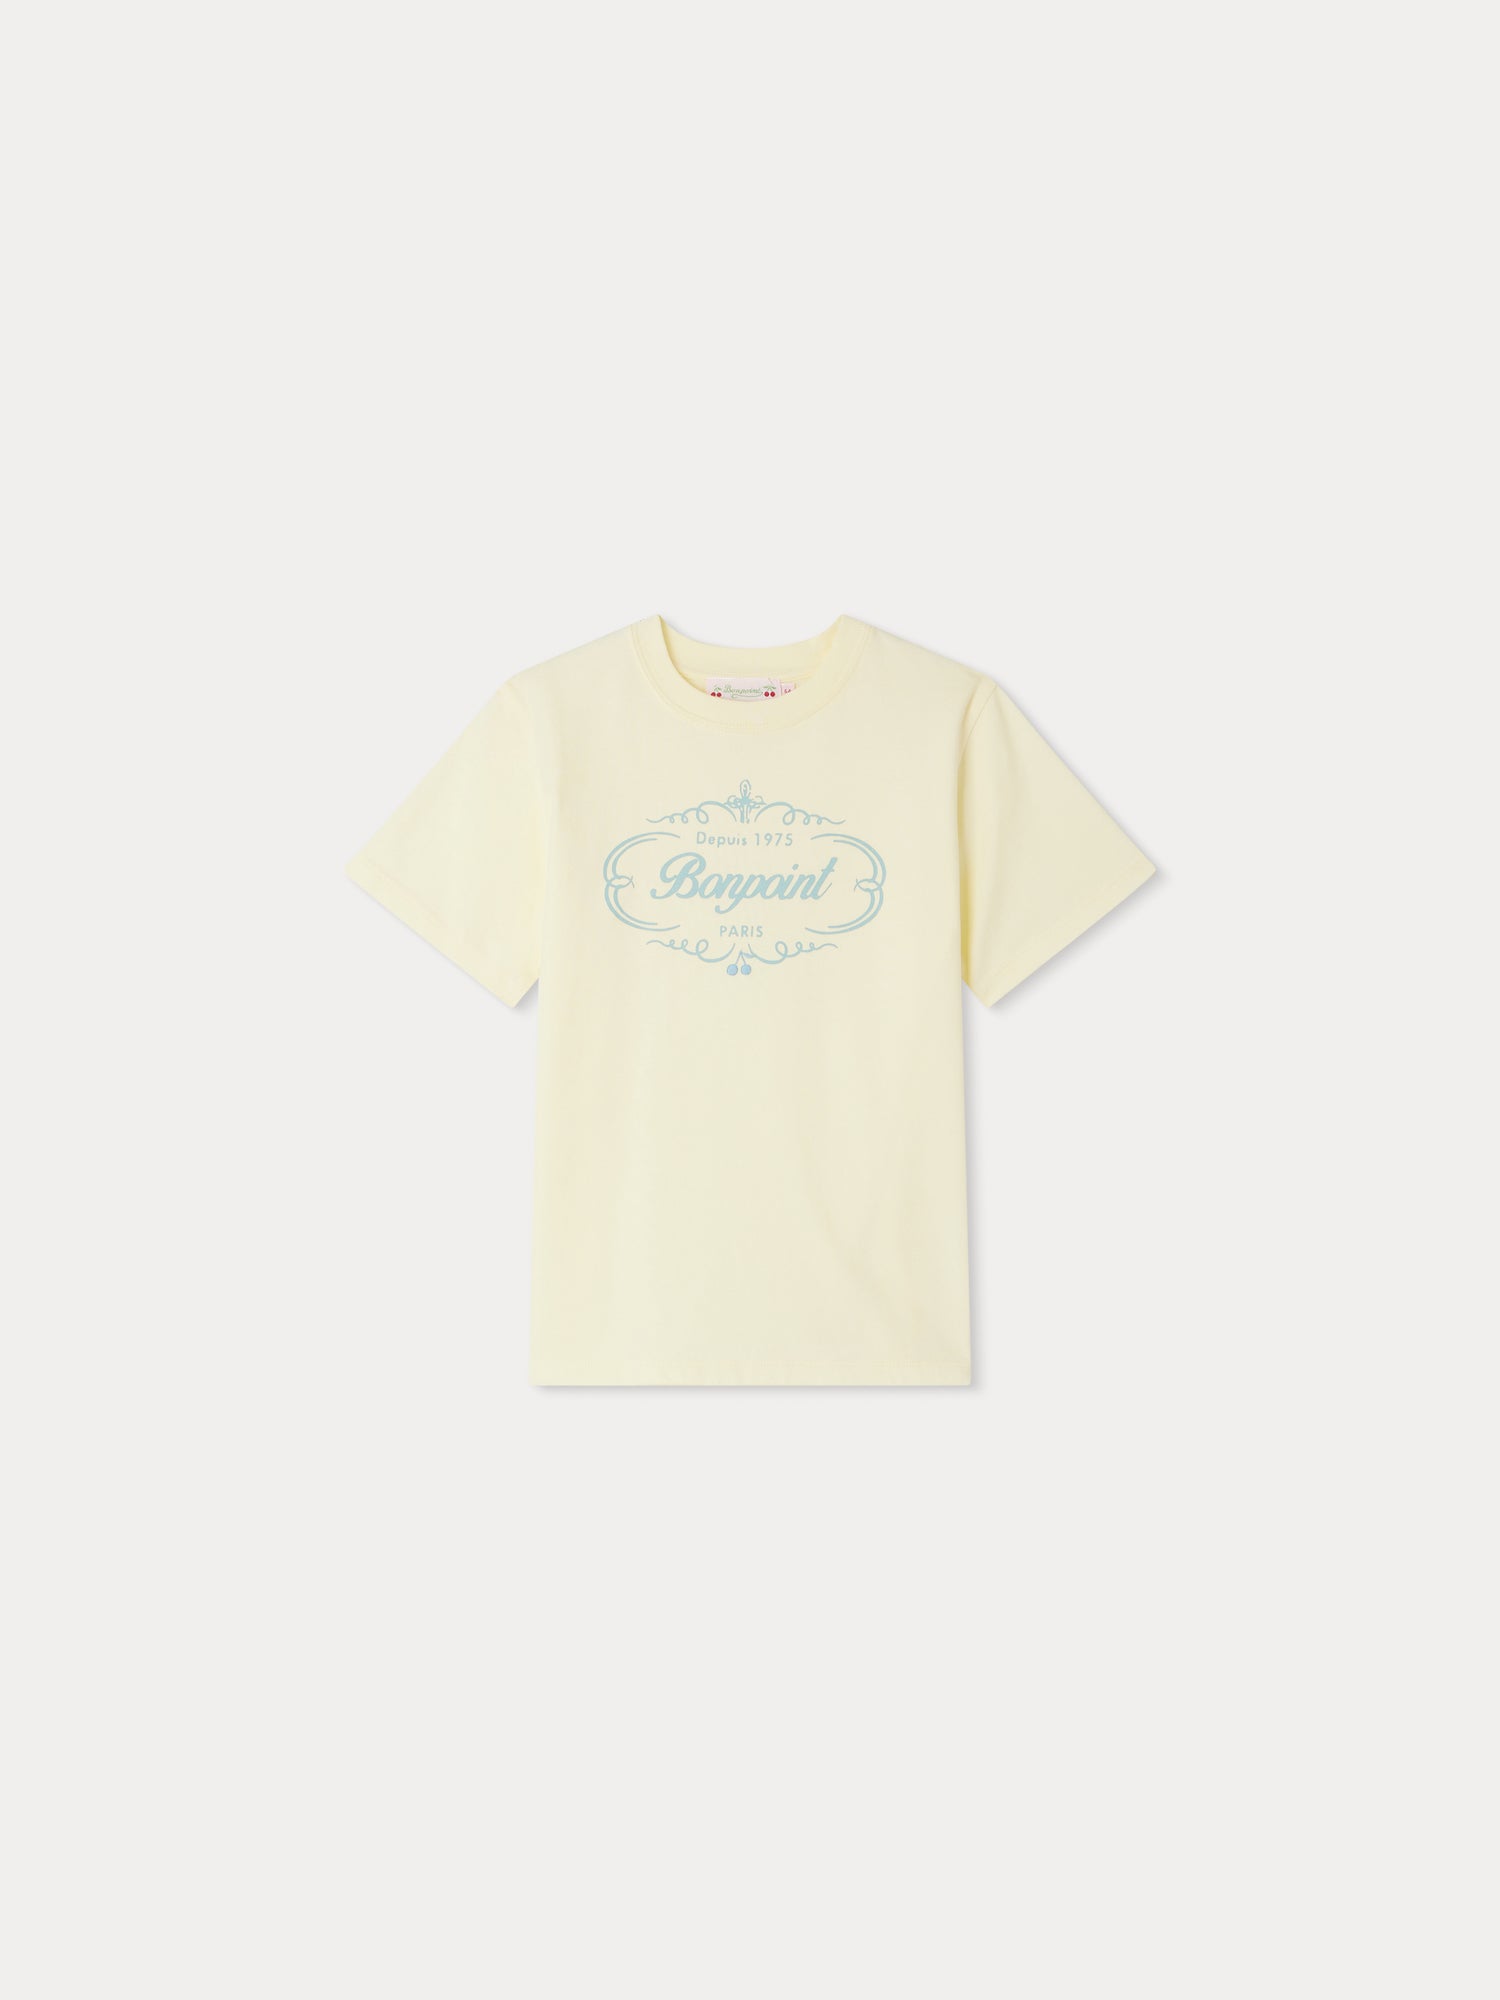 Thida T-shirt yellow • Bonpoint